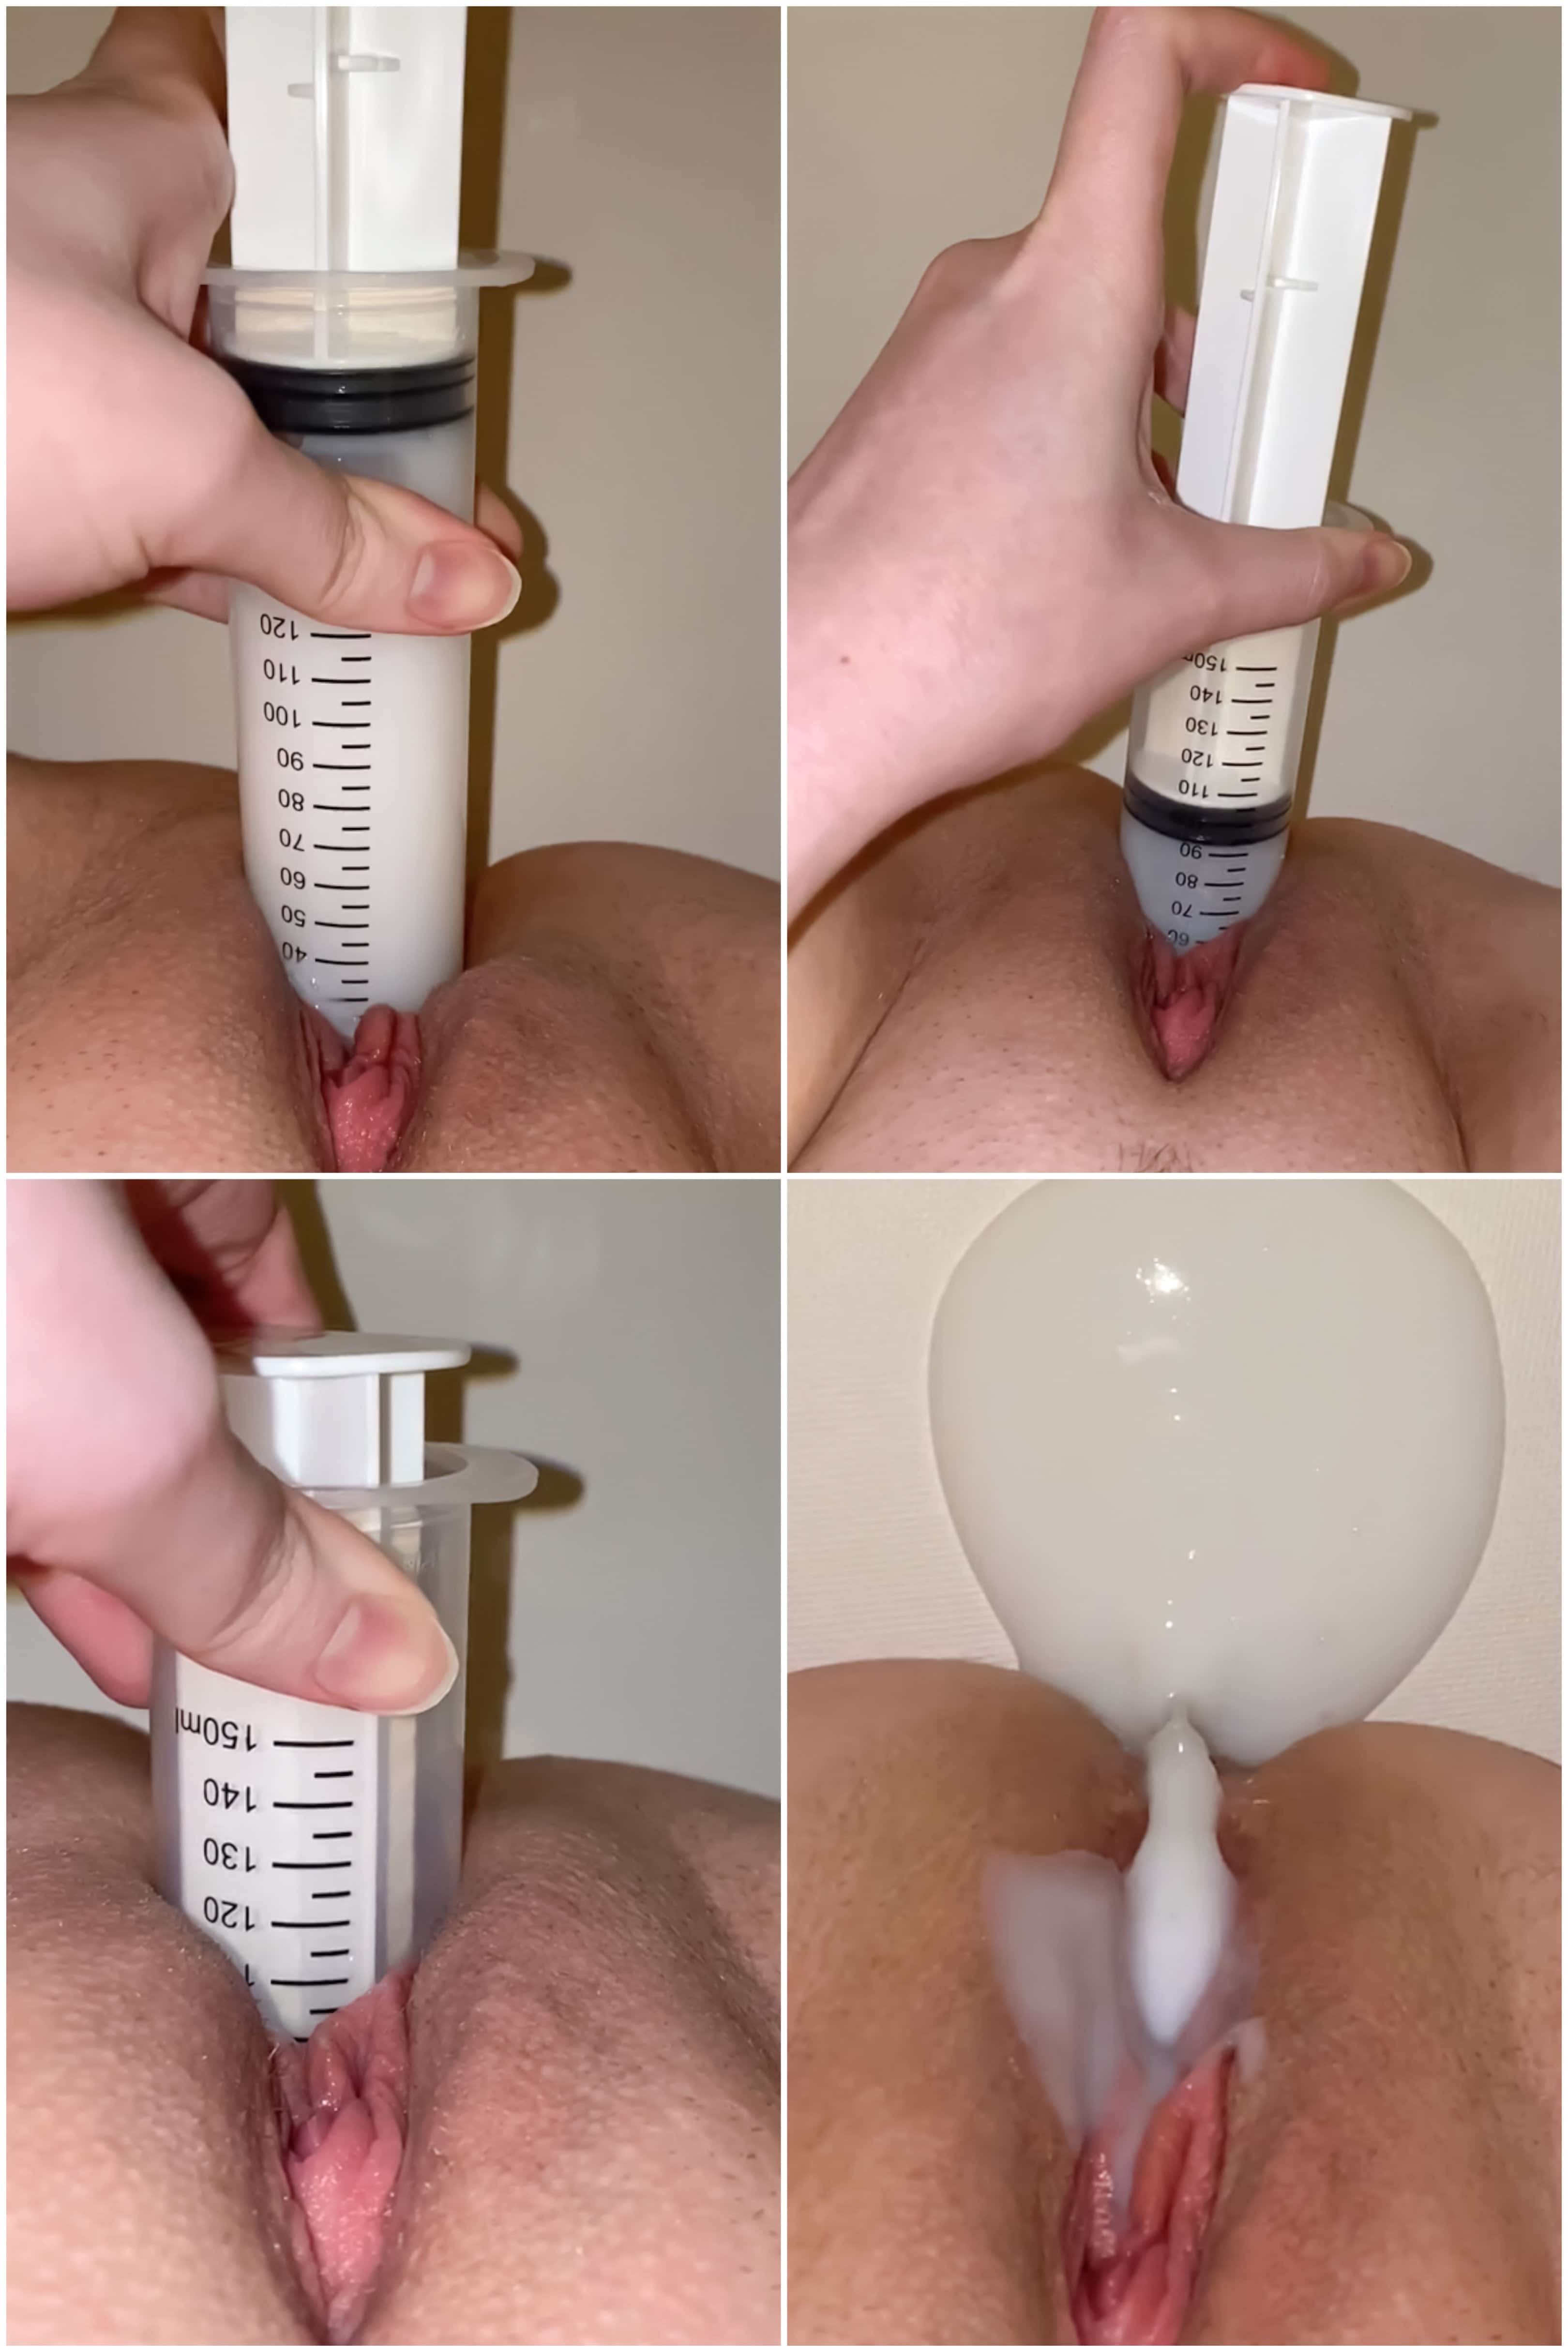 sperm injected free cuckold porn movies Xxx Pics Hd